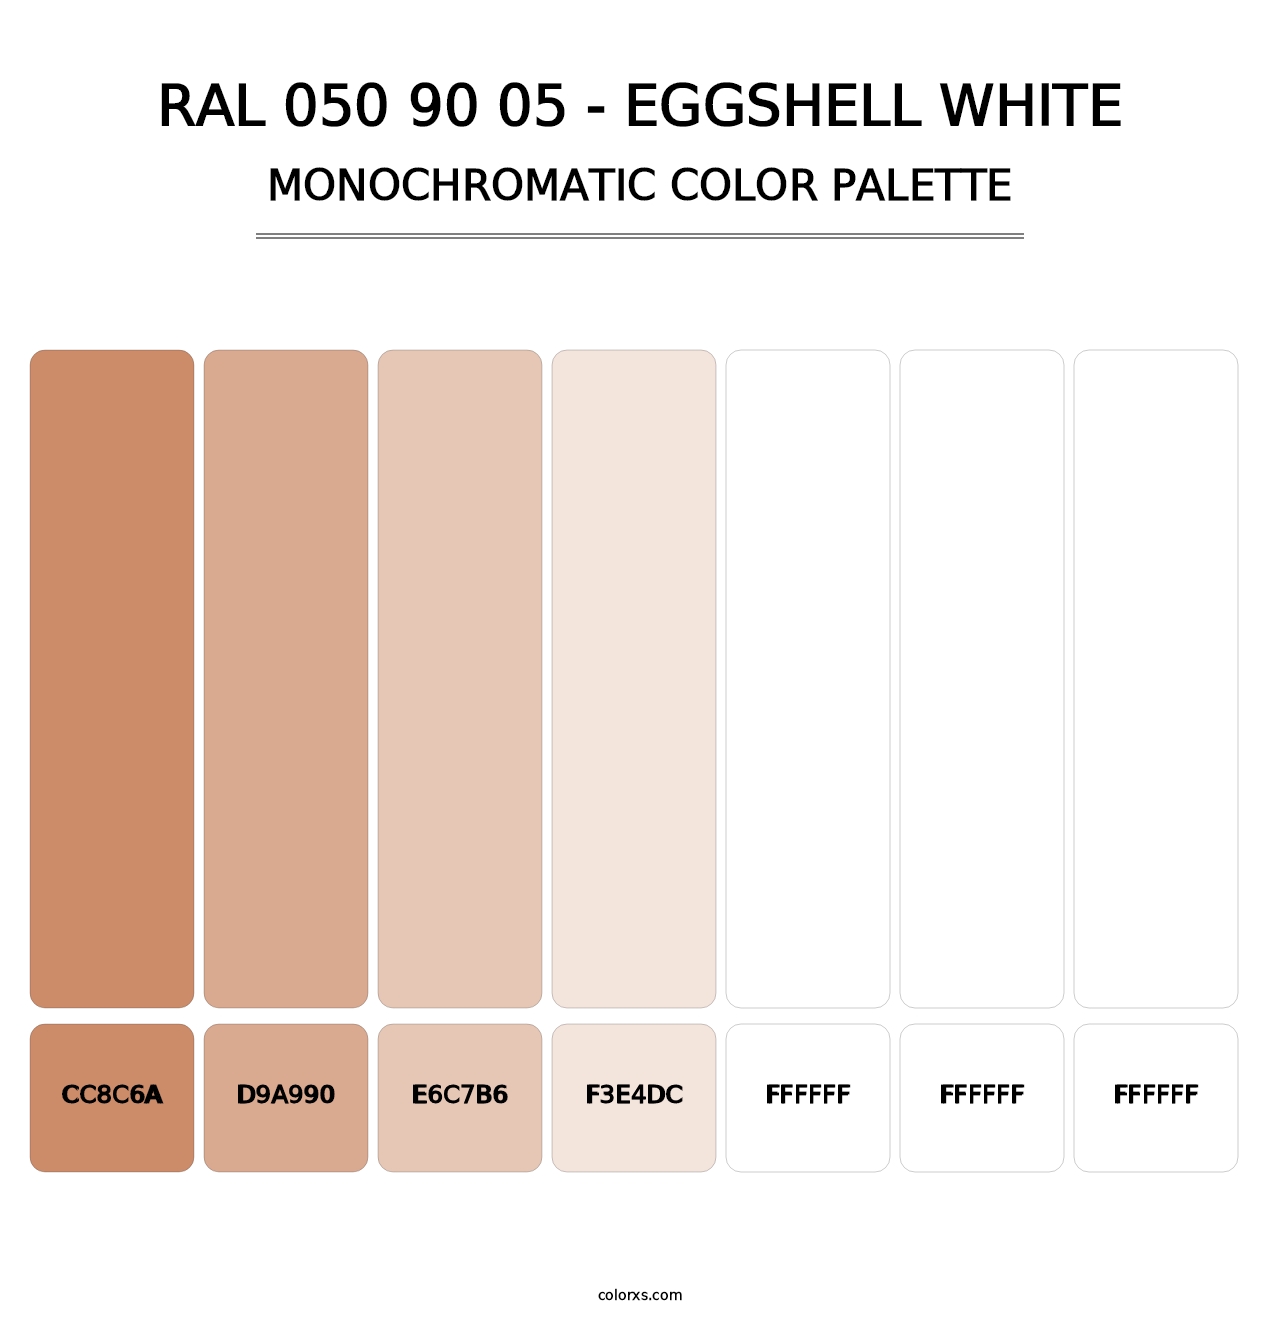 RAL 050 90 05 - Eggshell White - Monochromatic Color Palette